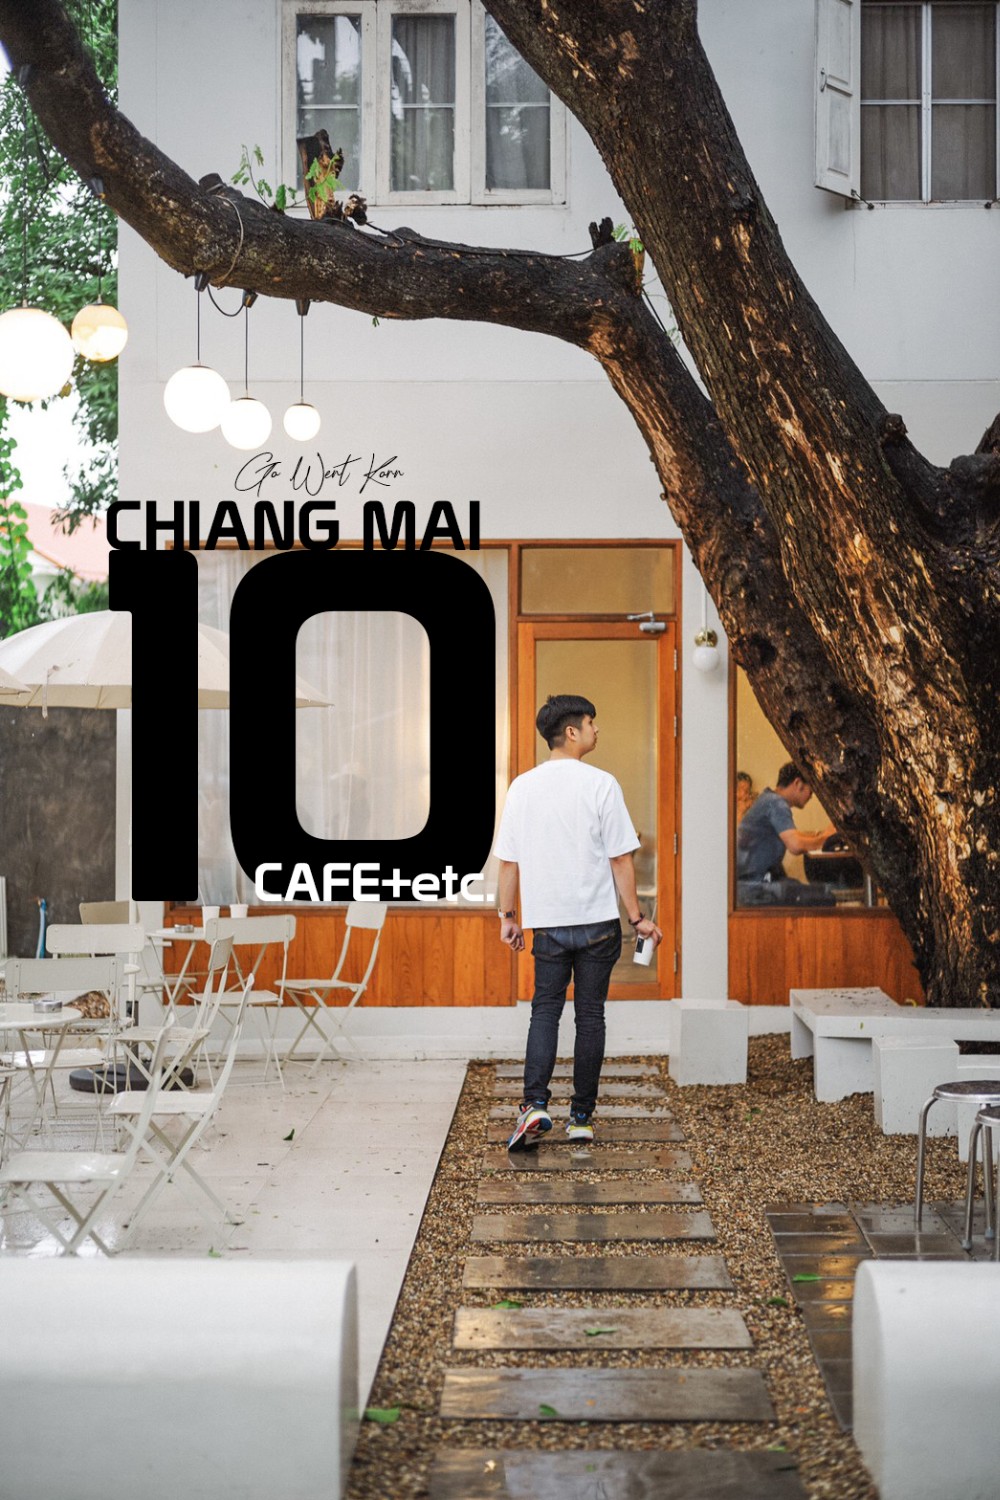 Chiang Mai 10 Cafe Etc พาไปล ย Hopping ร านใหม ๆในเช ยงใหม ท น าสนใจก นอ กรอบ Pantip